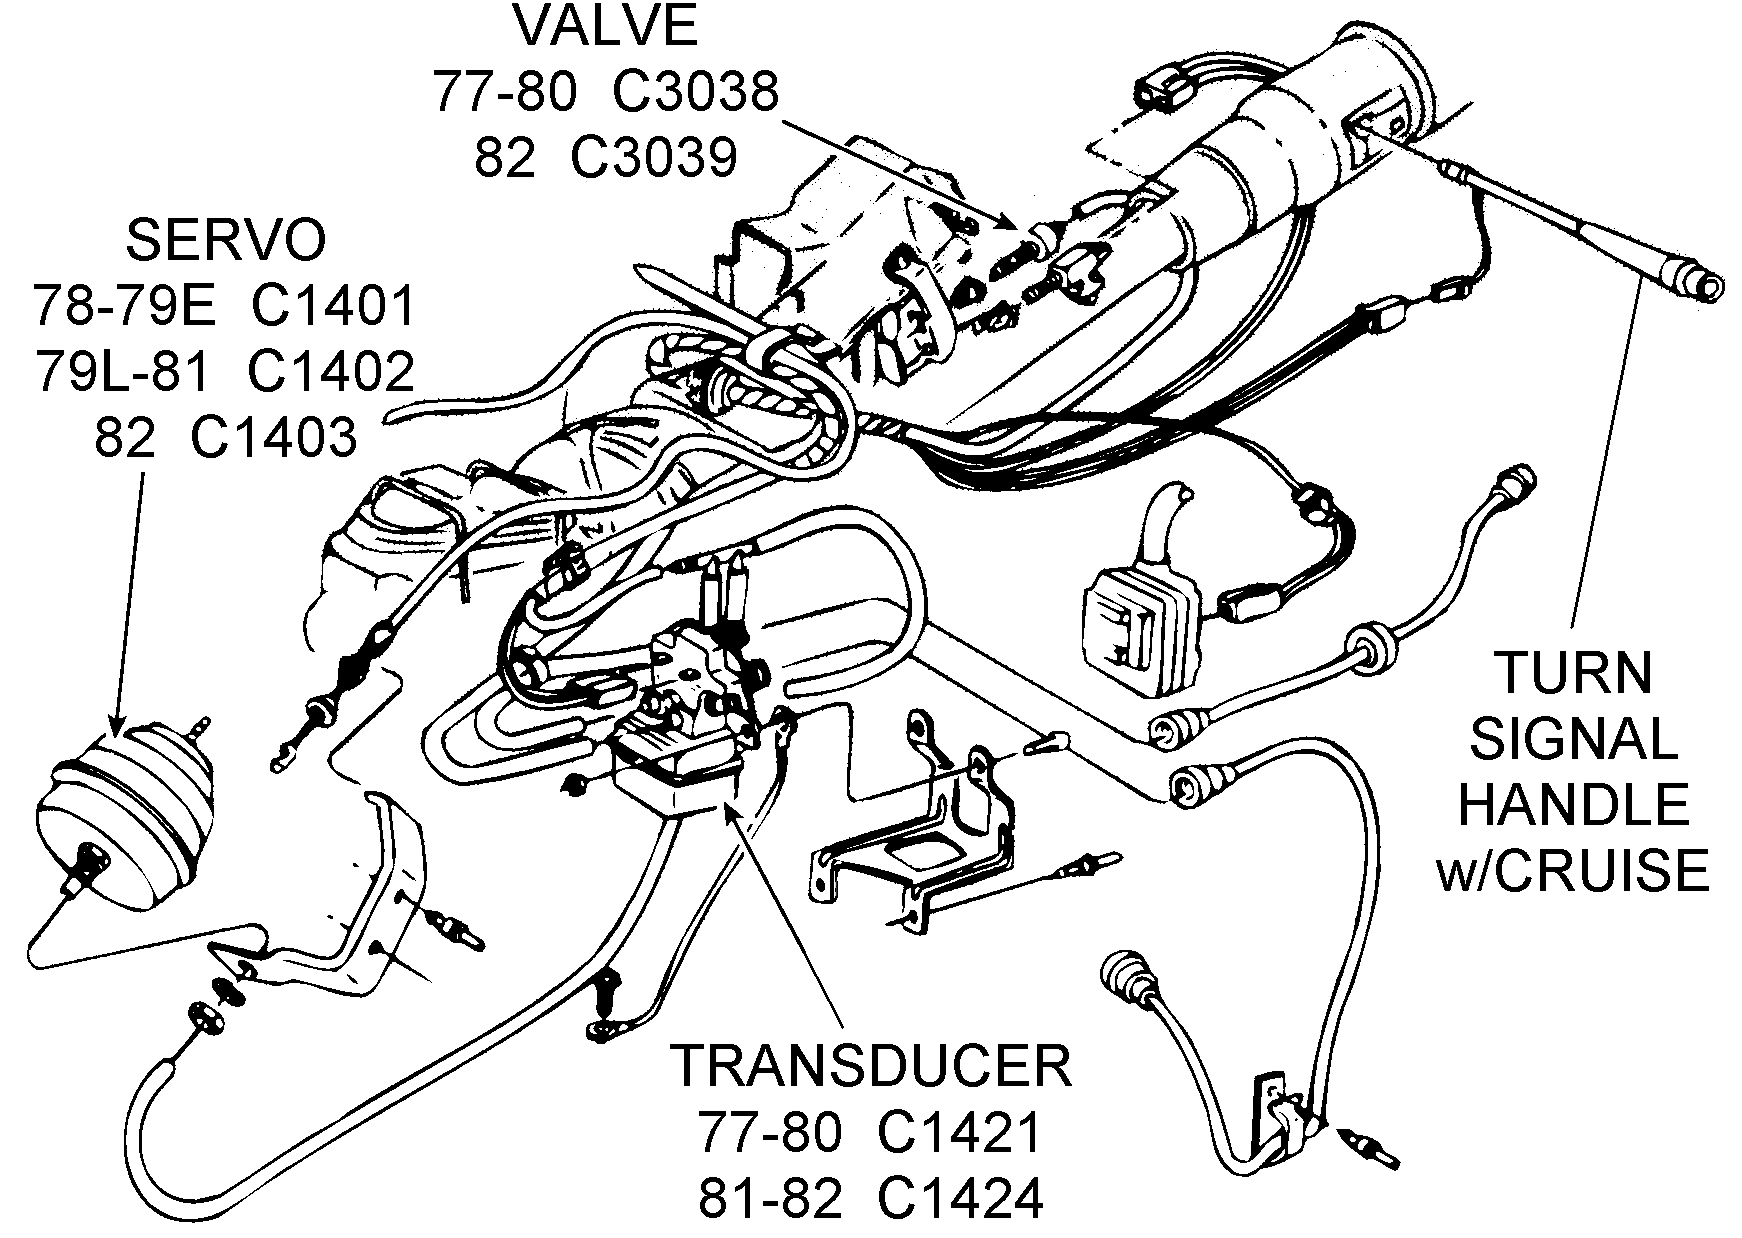 Cruise Control - Diagram View - Chicago Corvette Supply crossfire 150 wiring diagram free picture schematic 